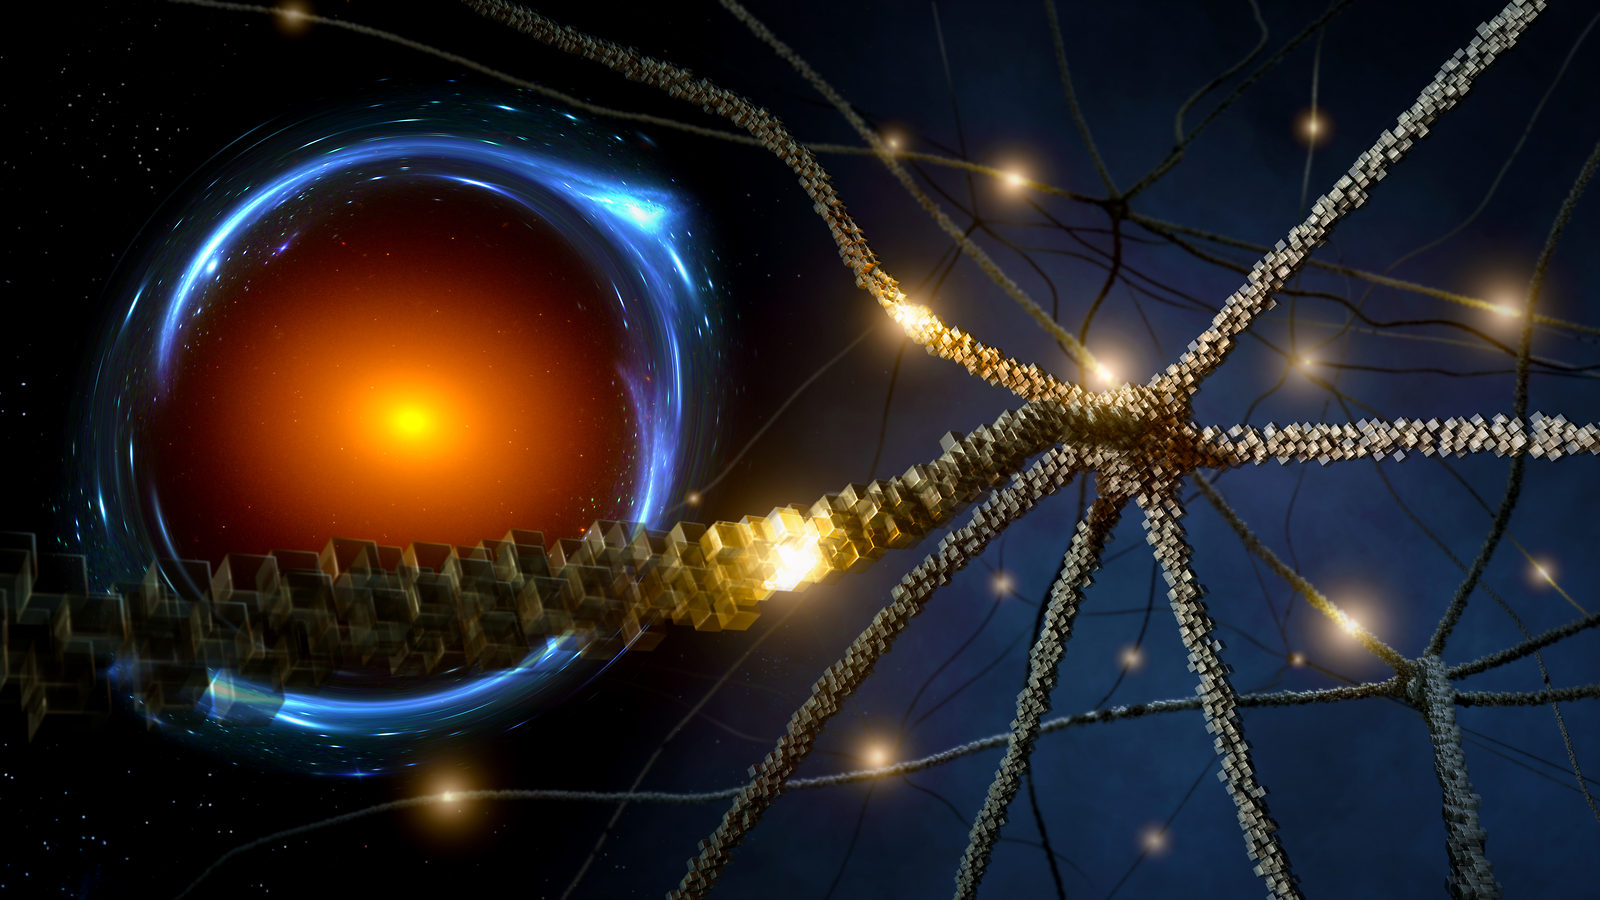 Neurons and Einstein ring